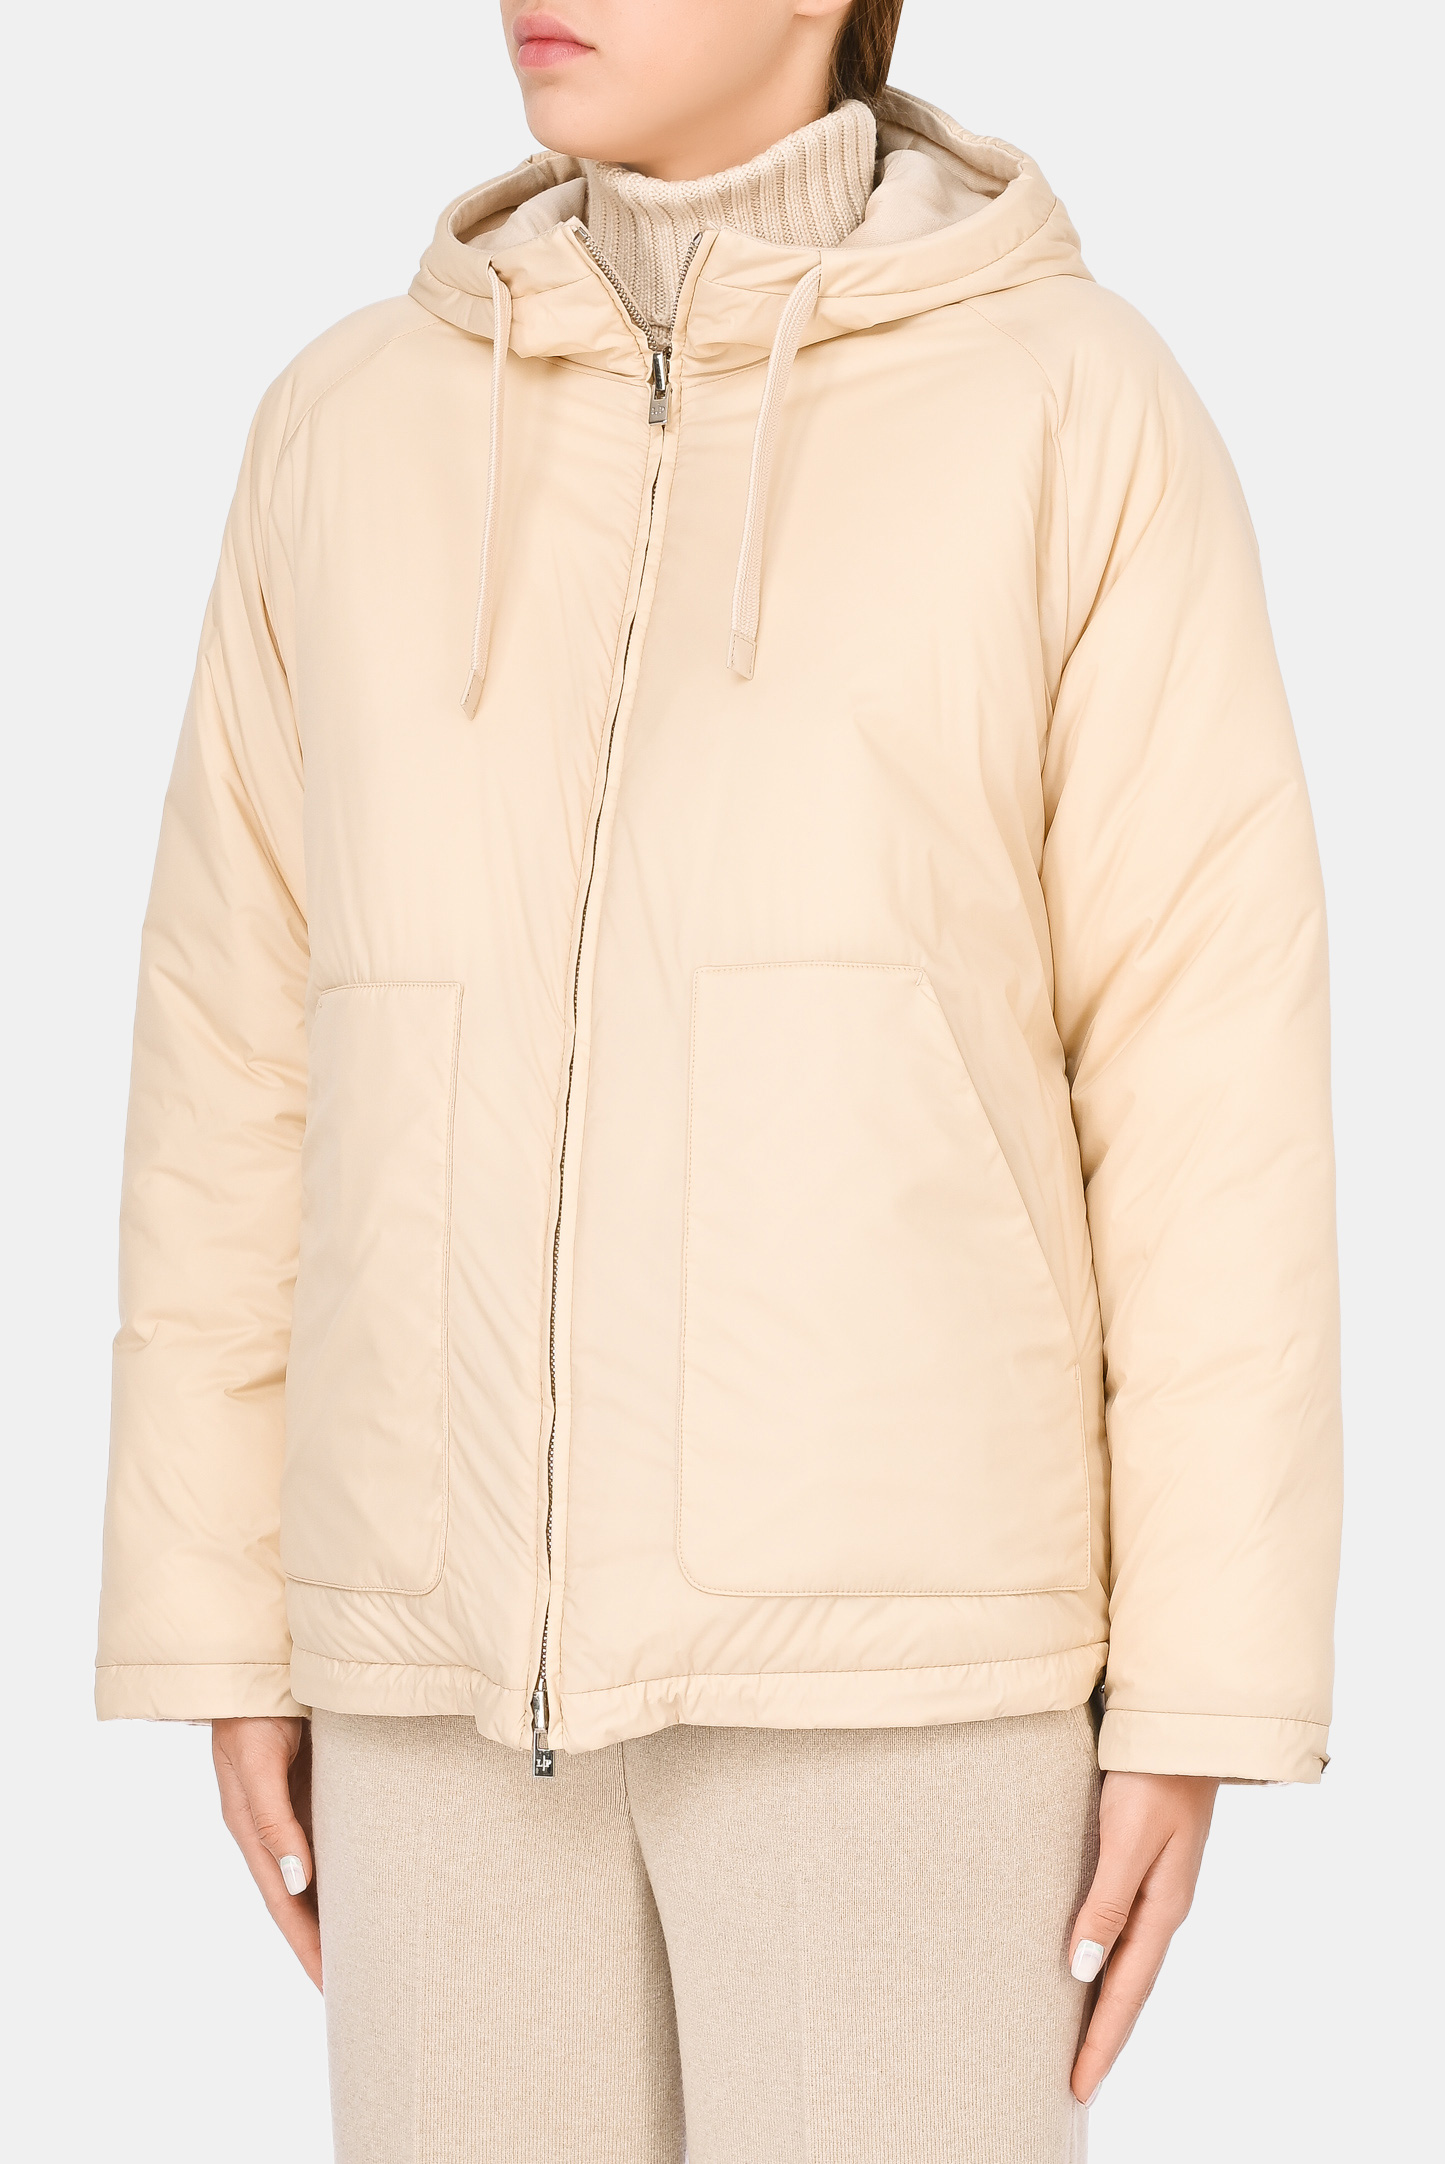 Куртка LORO PIANA F1-FAL7250, цвет: Молочный, Женский